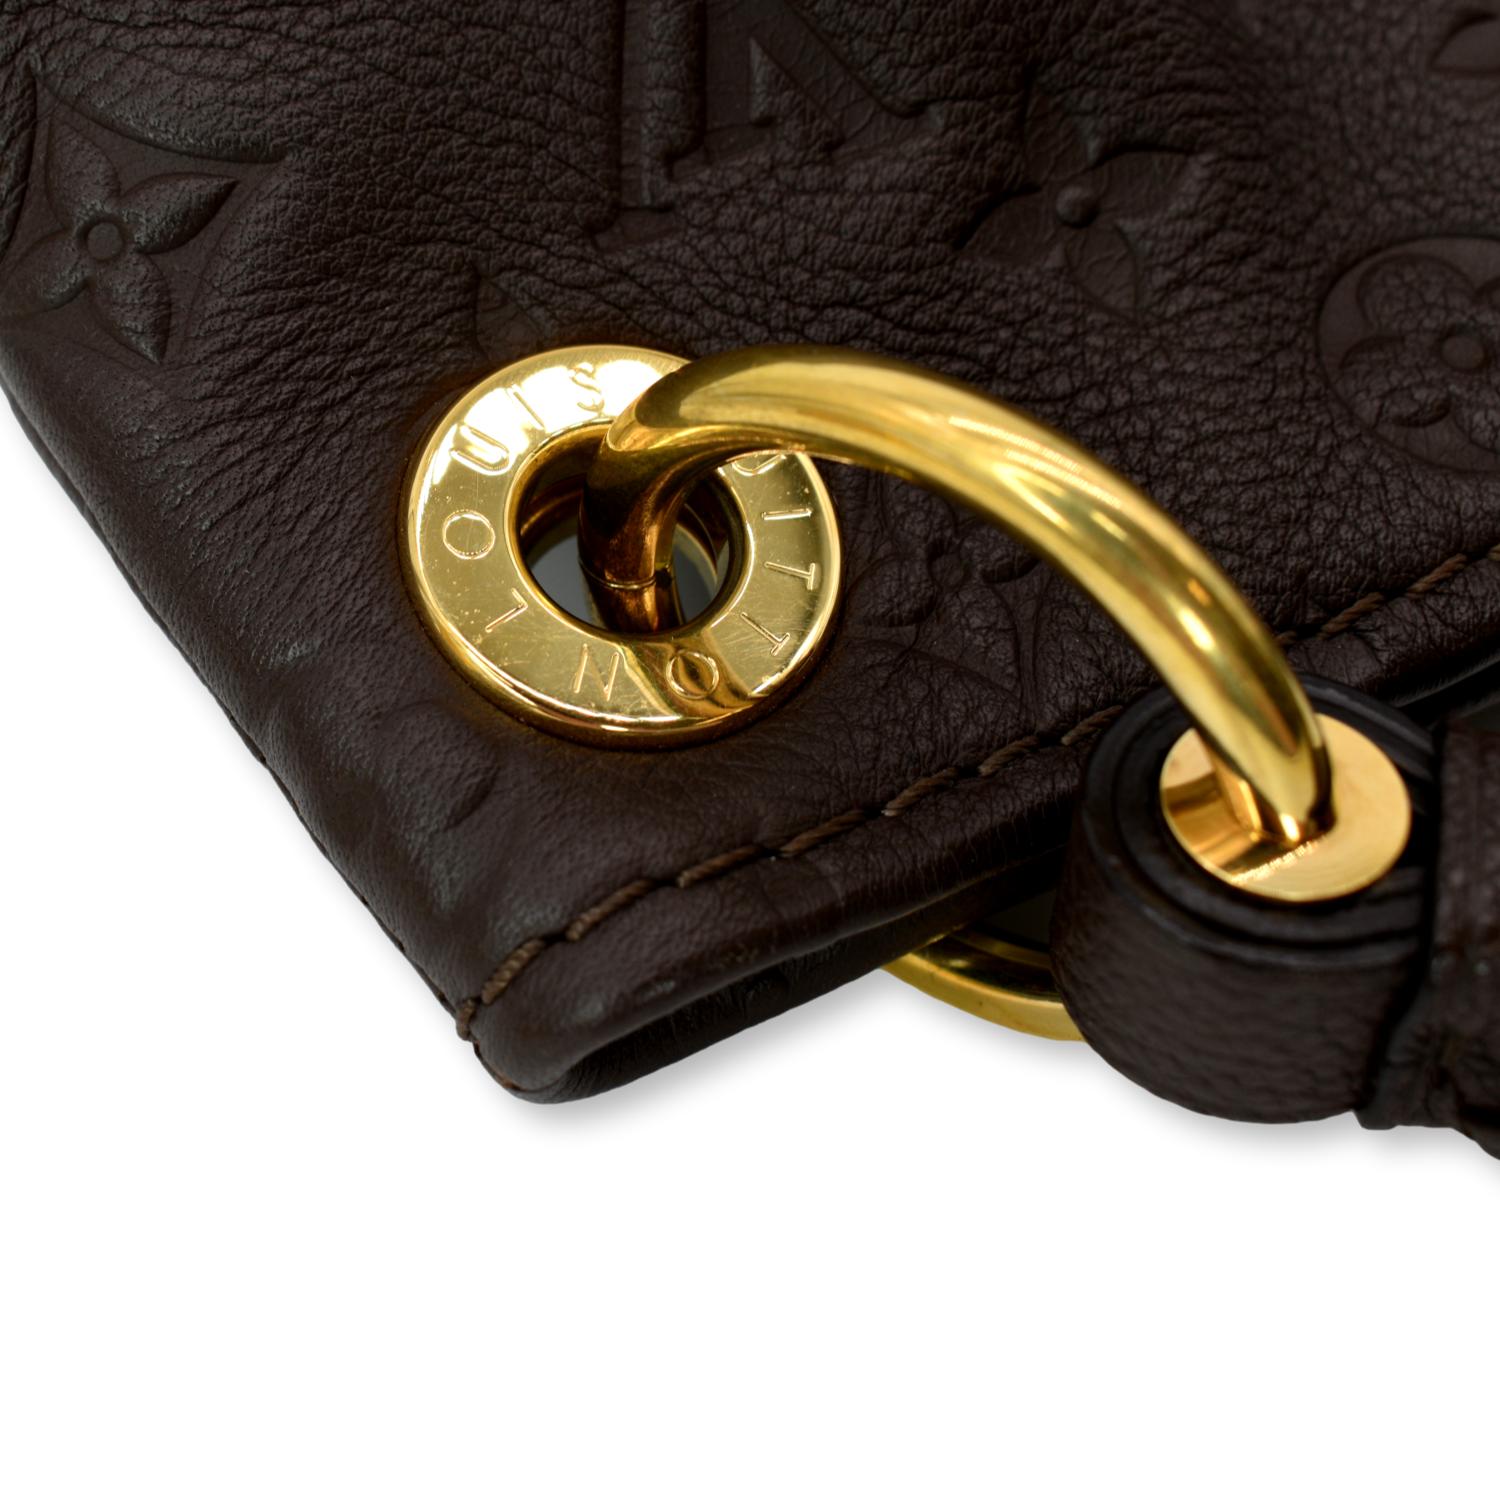 Louis Vuitton Terre Monogram Empreinte Leather Artsy MM Bag Louis